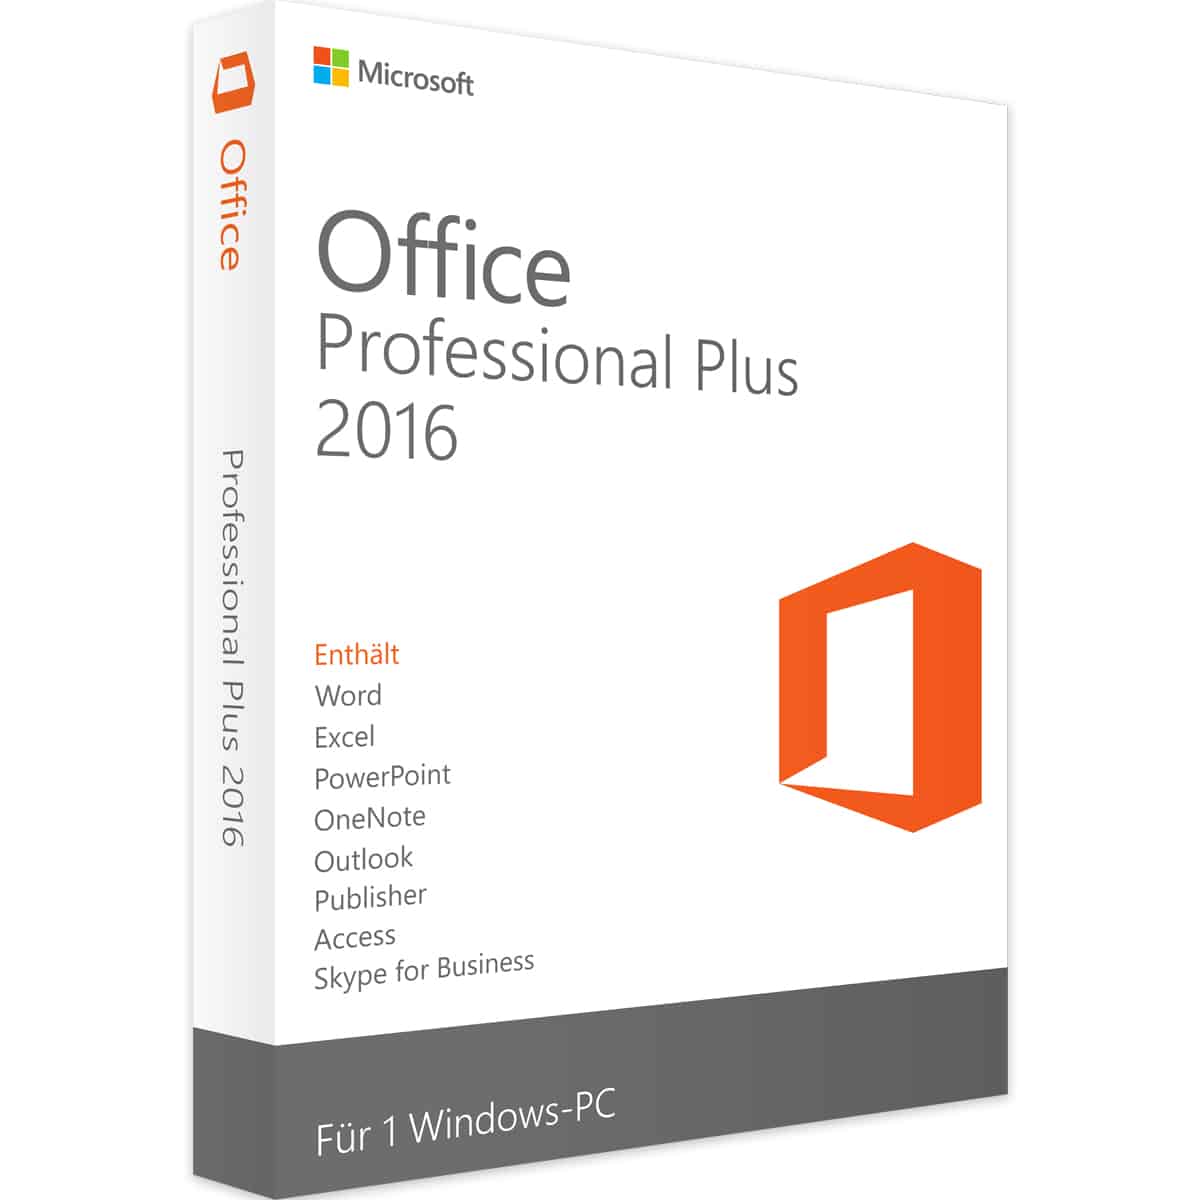 Microsoft Office 2016 Professional Plus Product Key